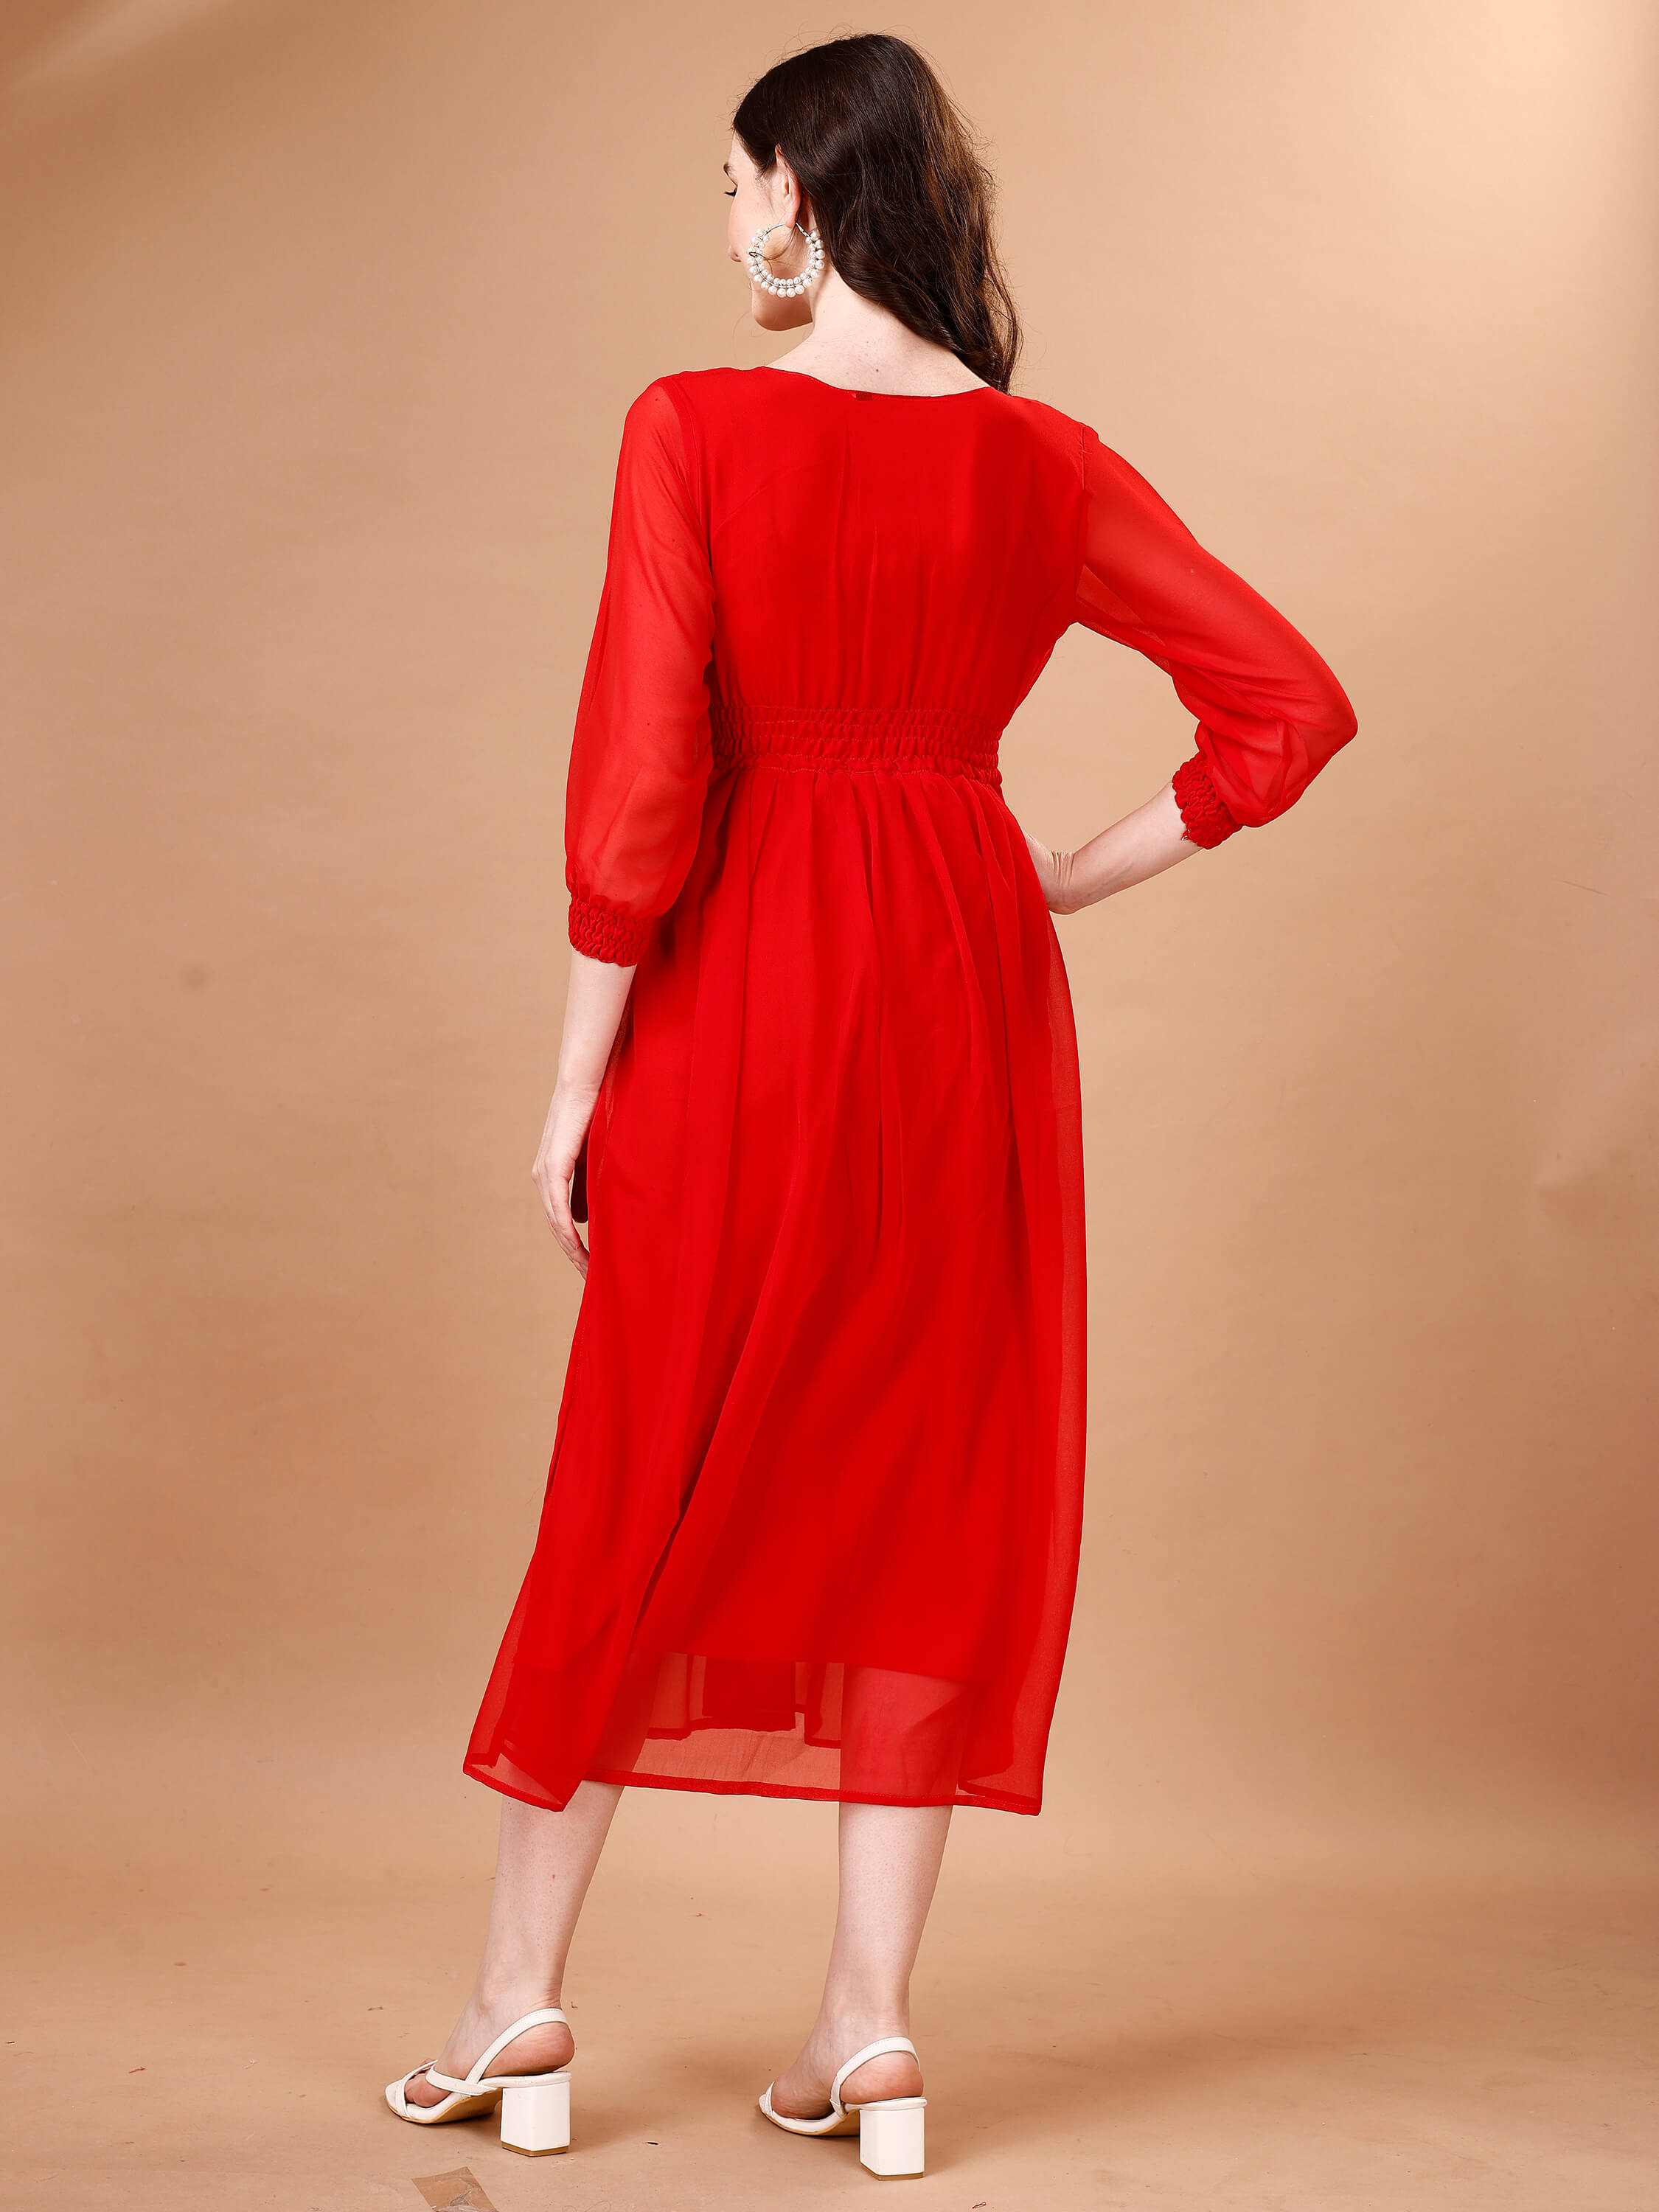 Chic Simplicity: Georgette Calf Length Dress with Elegant Side Slit - thevendorvilla